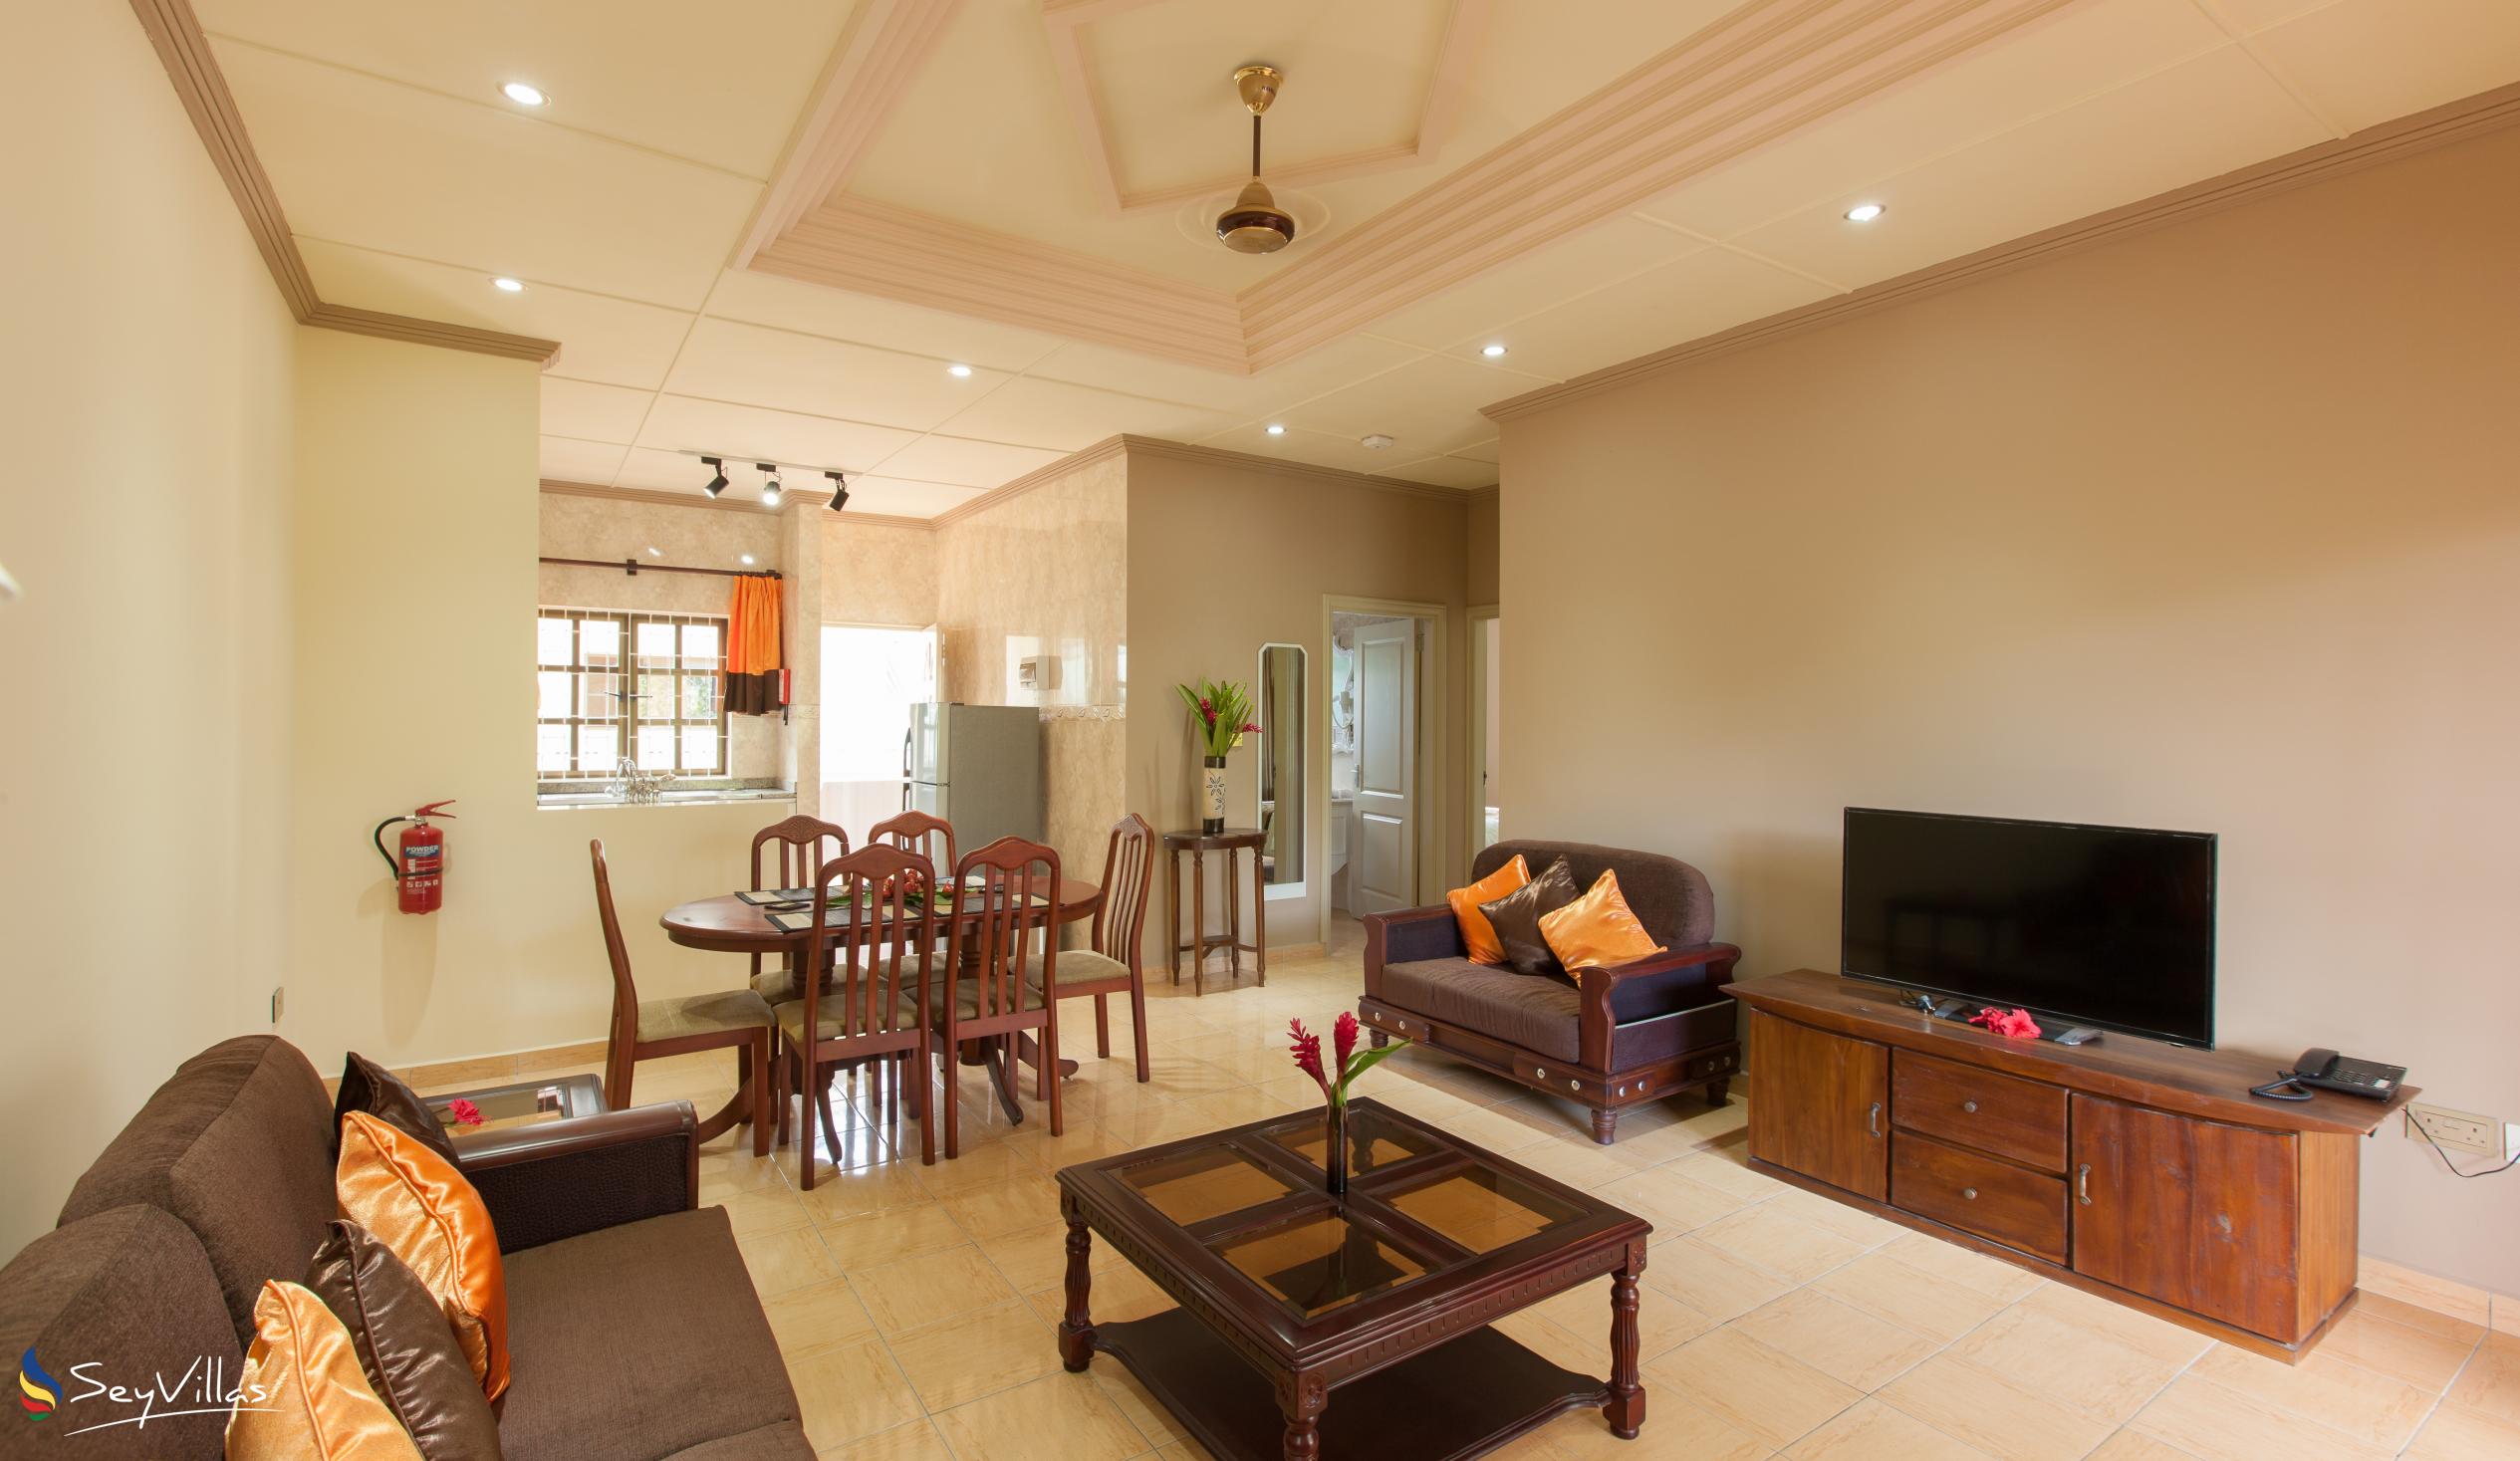 Foto 27: Chez Bea Villa - Appartement 2 chambres - Praslin (Seychelles)